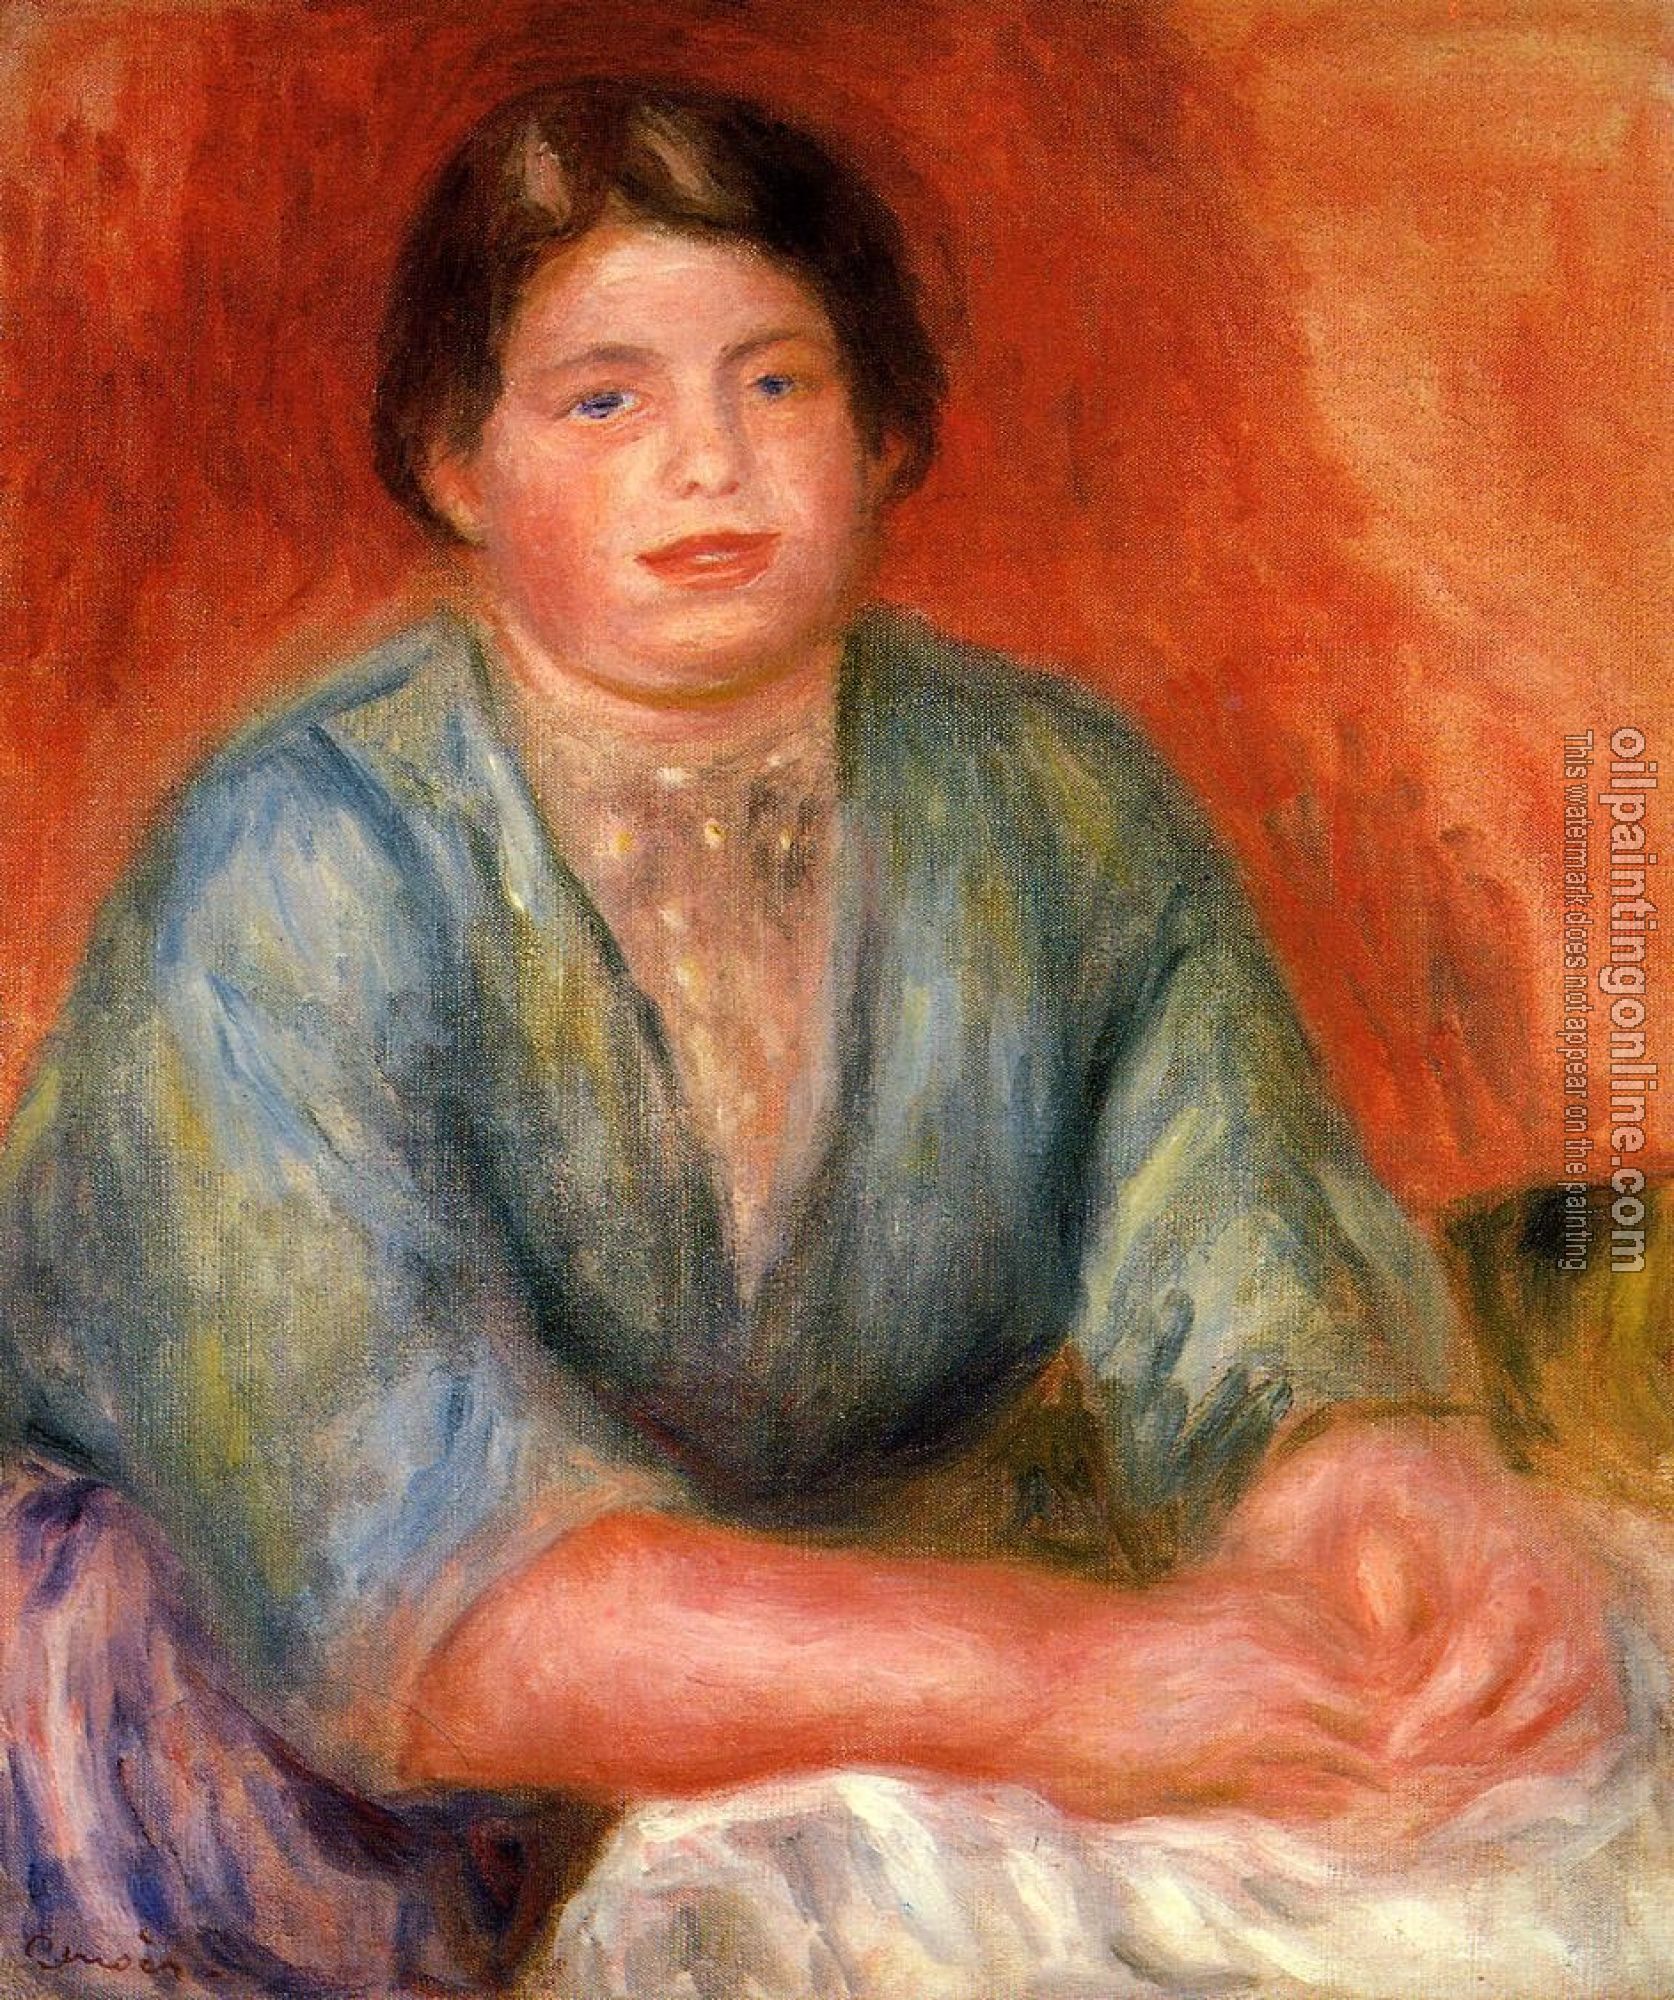 Renoir, Pierre Auguste - Seated Woman in a Blue Dress